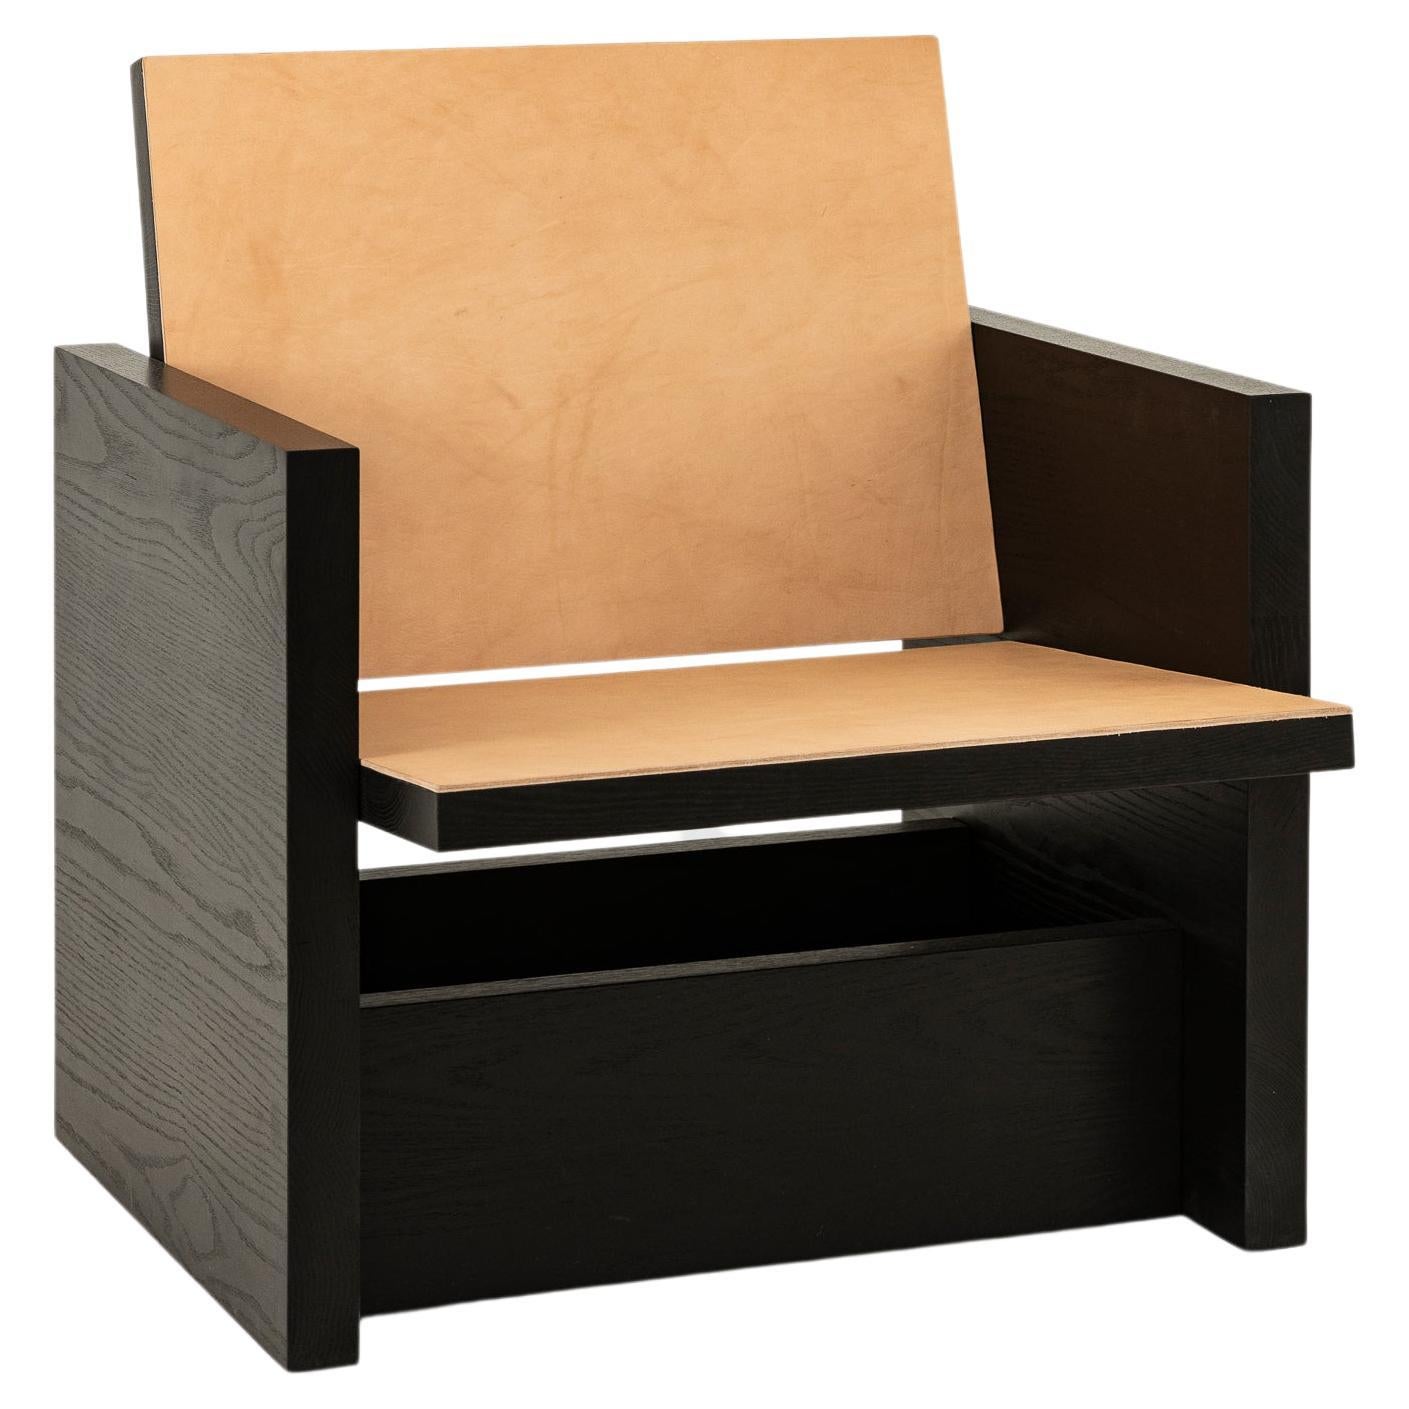 Clavijero Lounge Chair, Black Finished Oak Wood For Sale